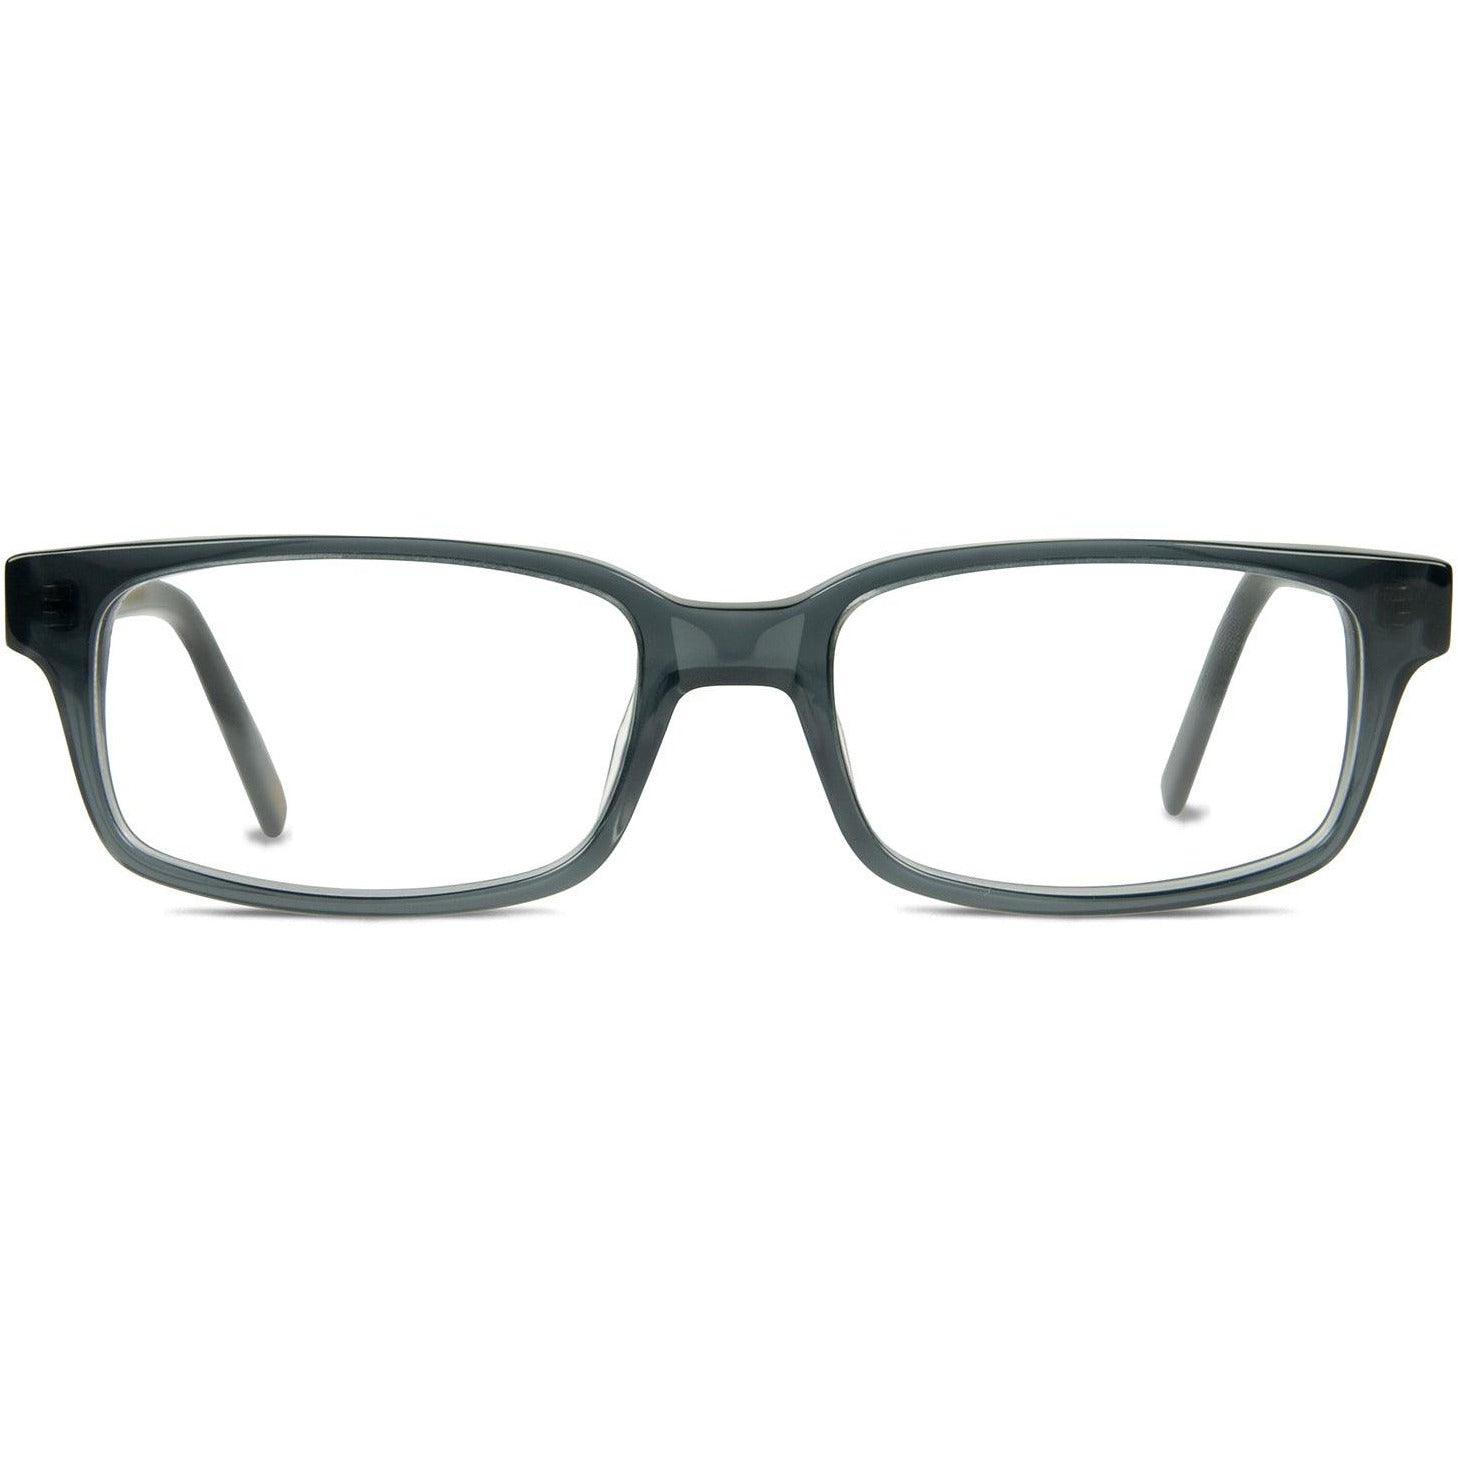 Prince Rectangular Frame in Steel Illusion Eyeglasses High End Designer Prescription Glasses Blue Light - Vint & York